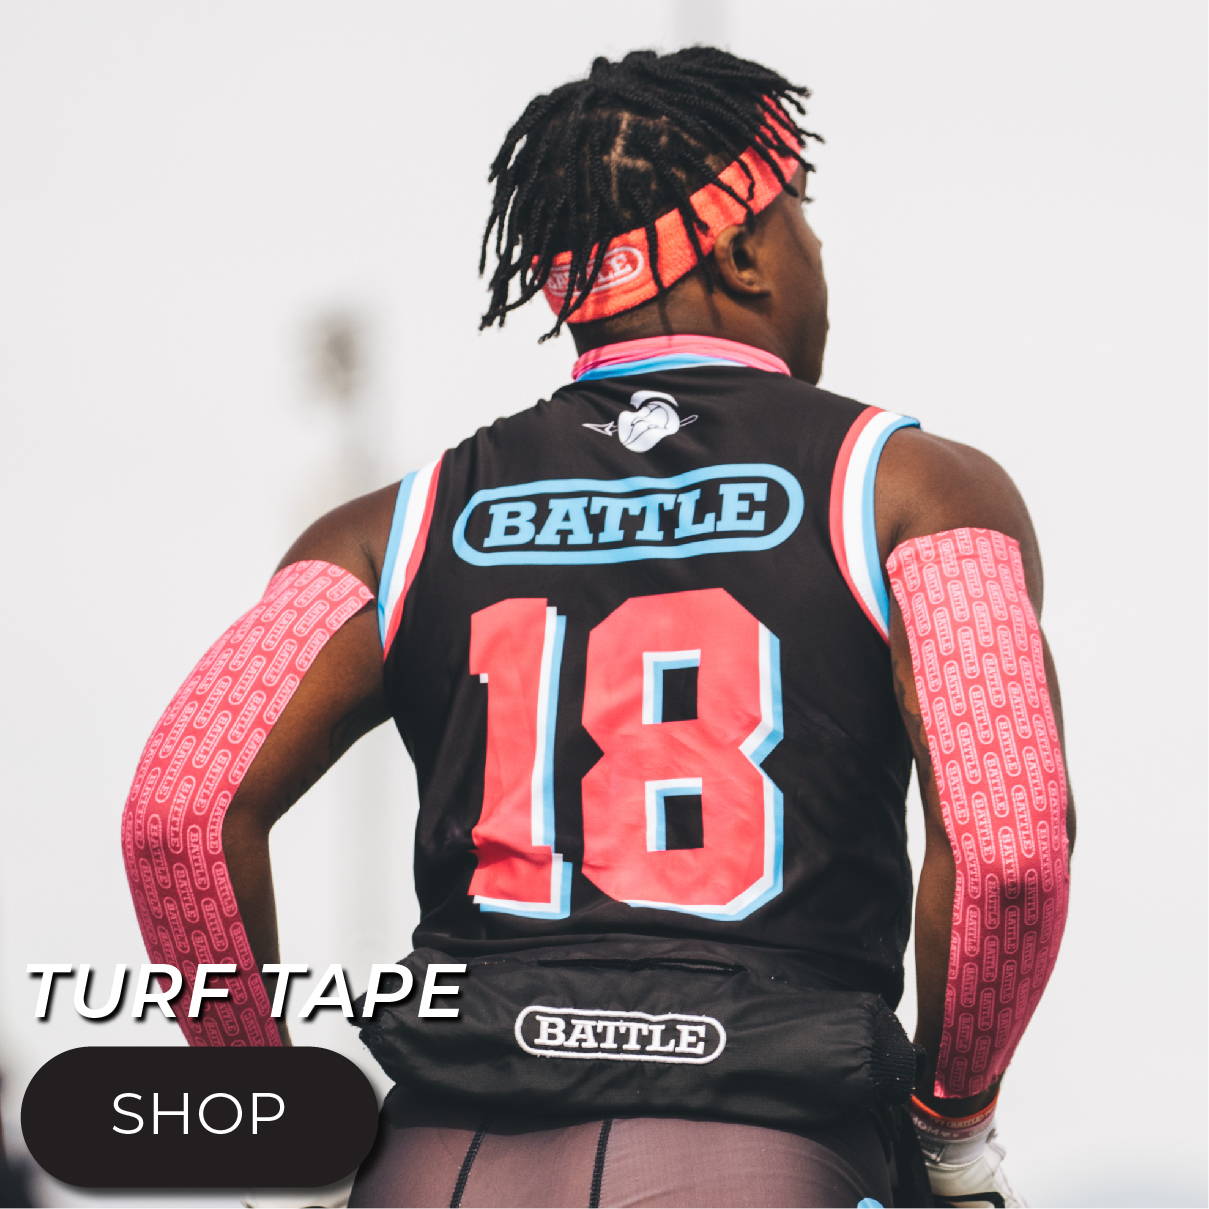 Turf Tape